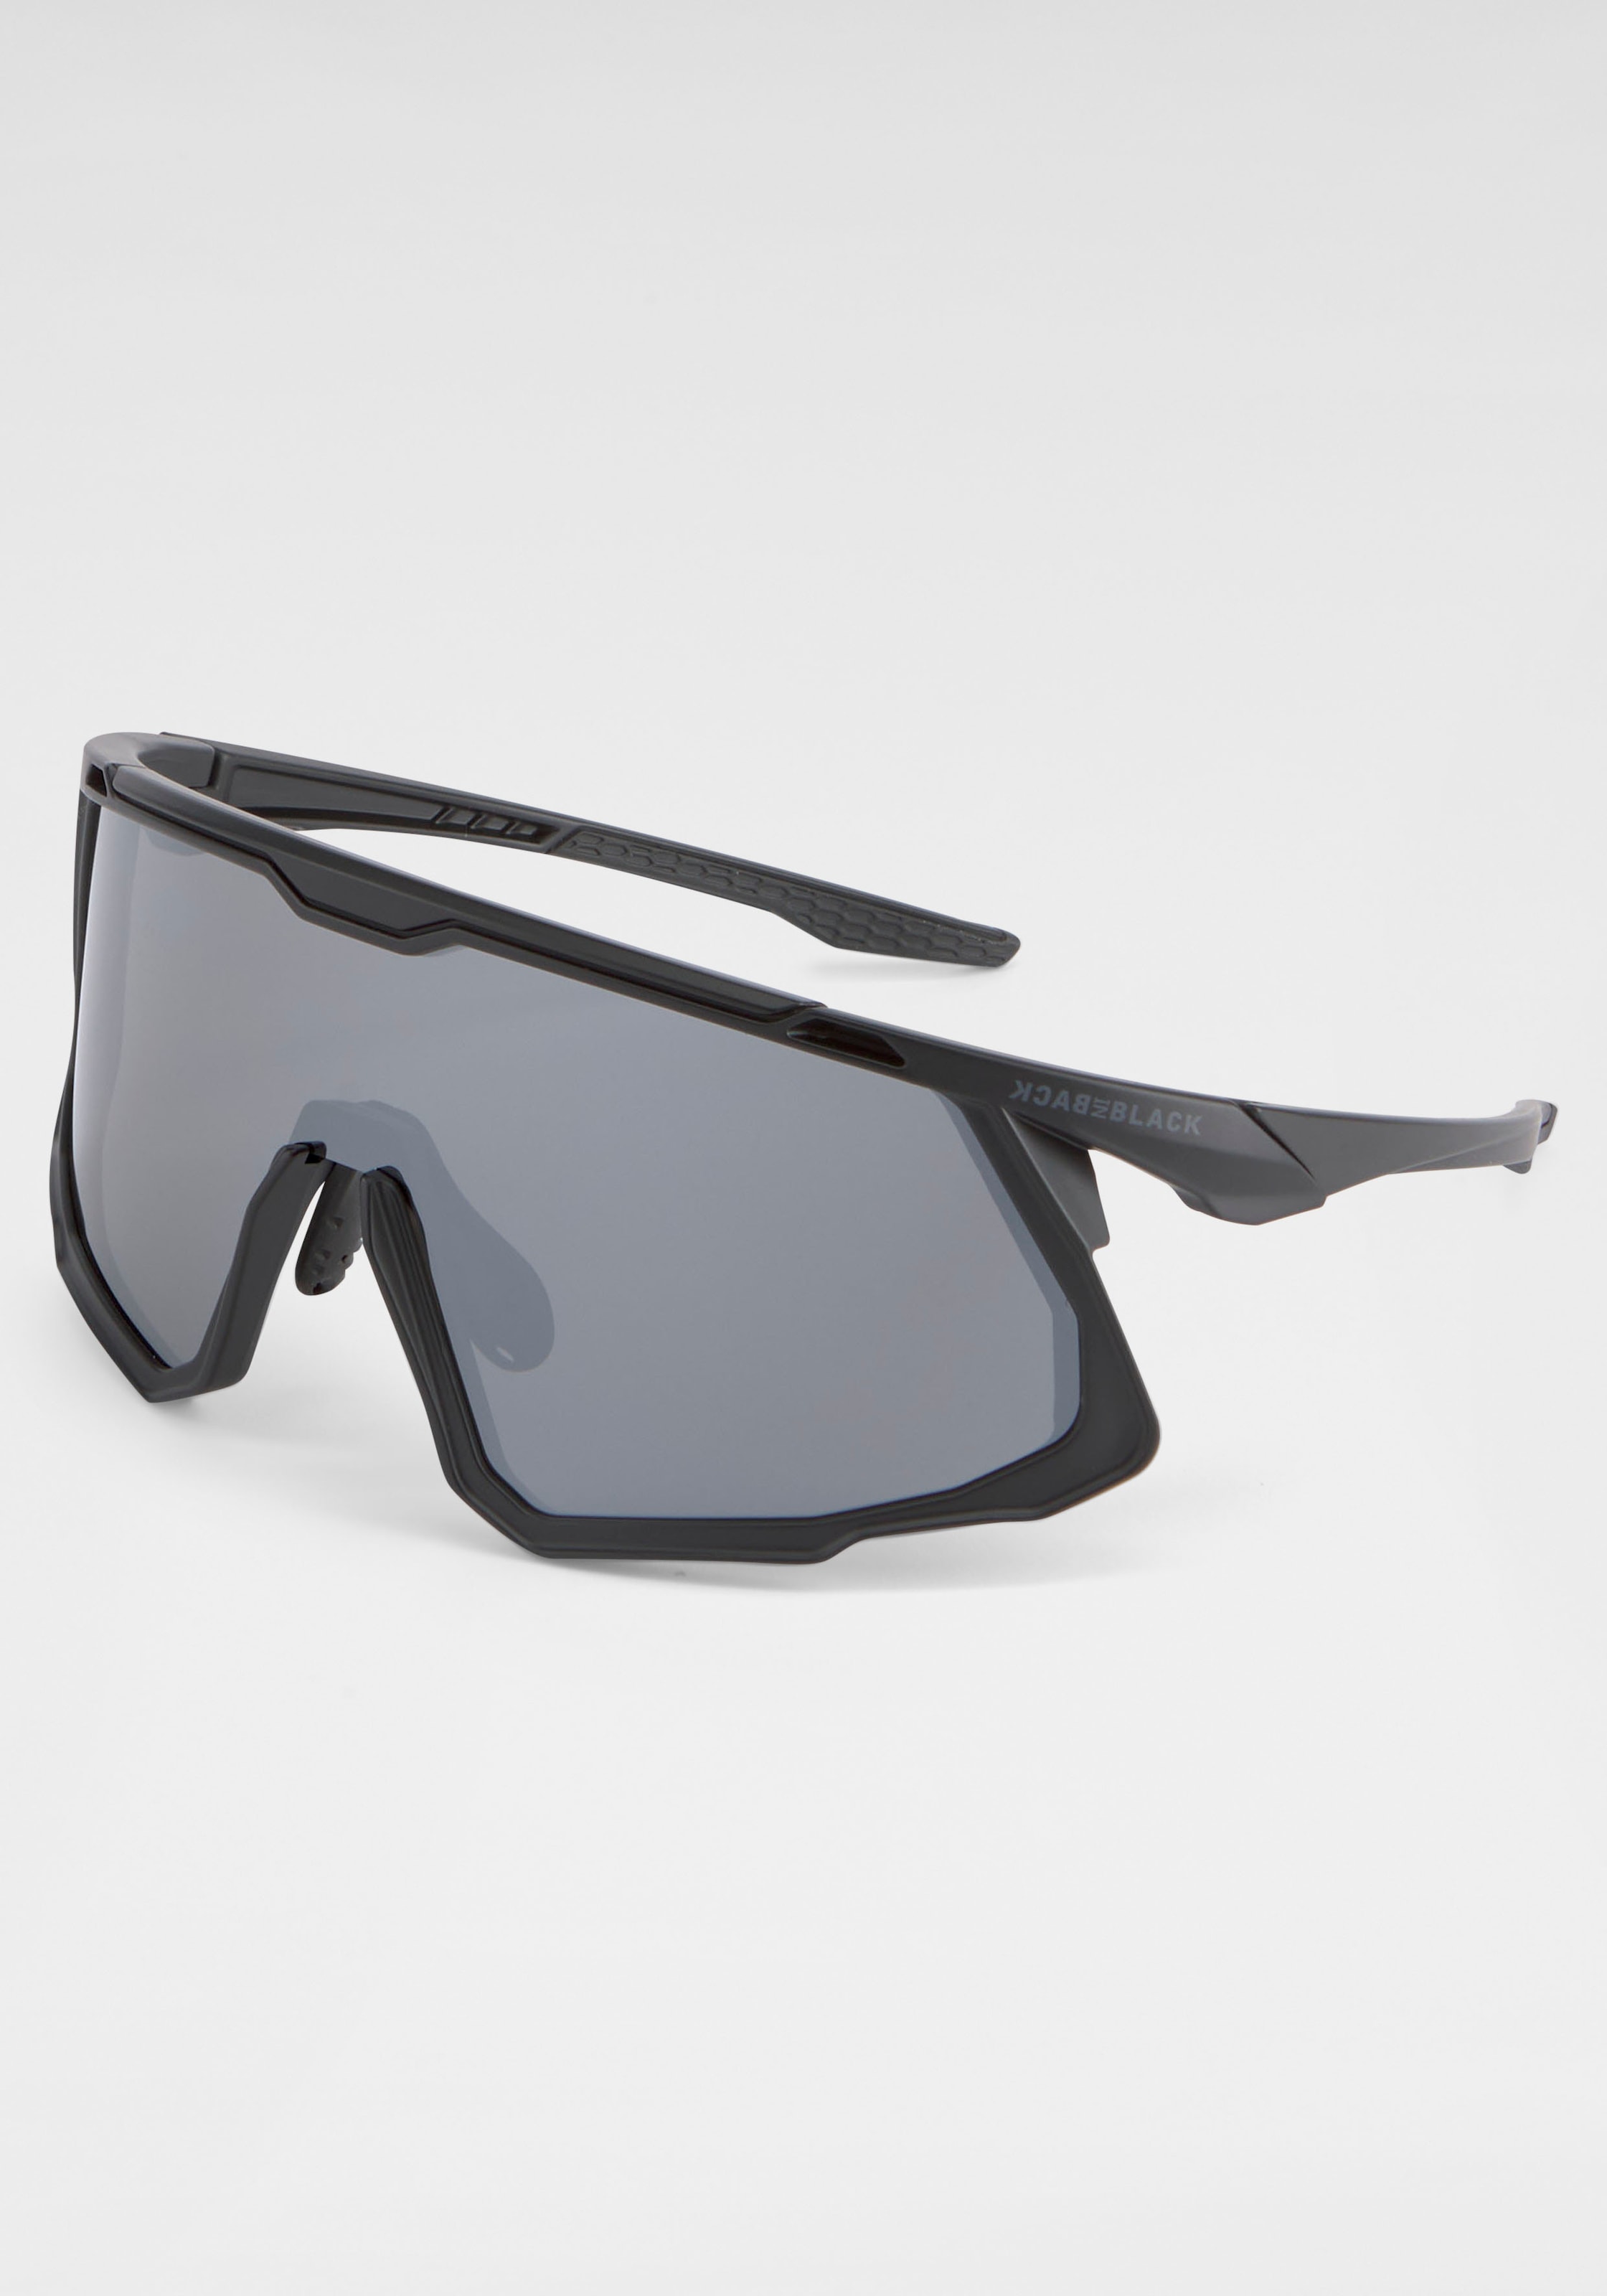 BACK IN Form gebogene BLACK online Eyewear Sonnenbrille